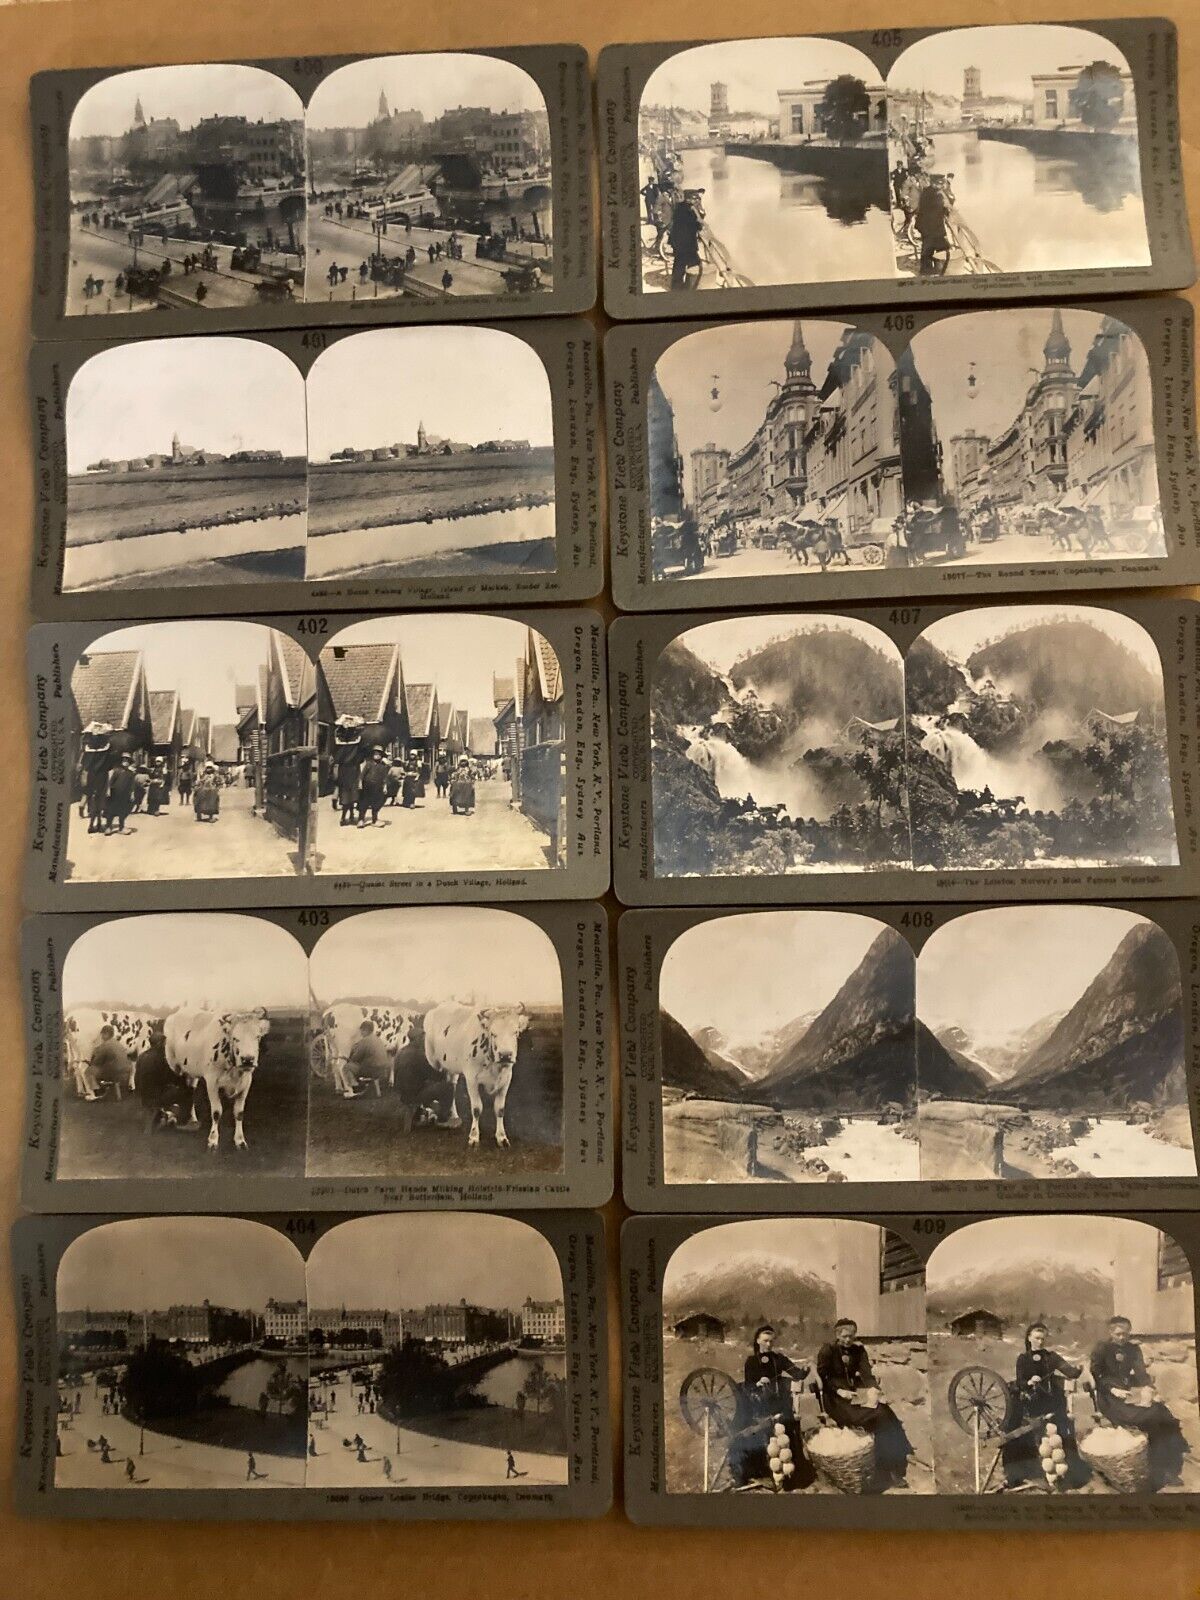 Keystone View Company - 100 consecutive stereoview slides, 400-499 Many country